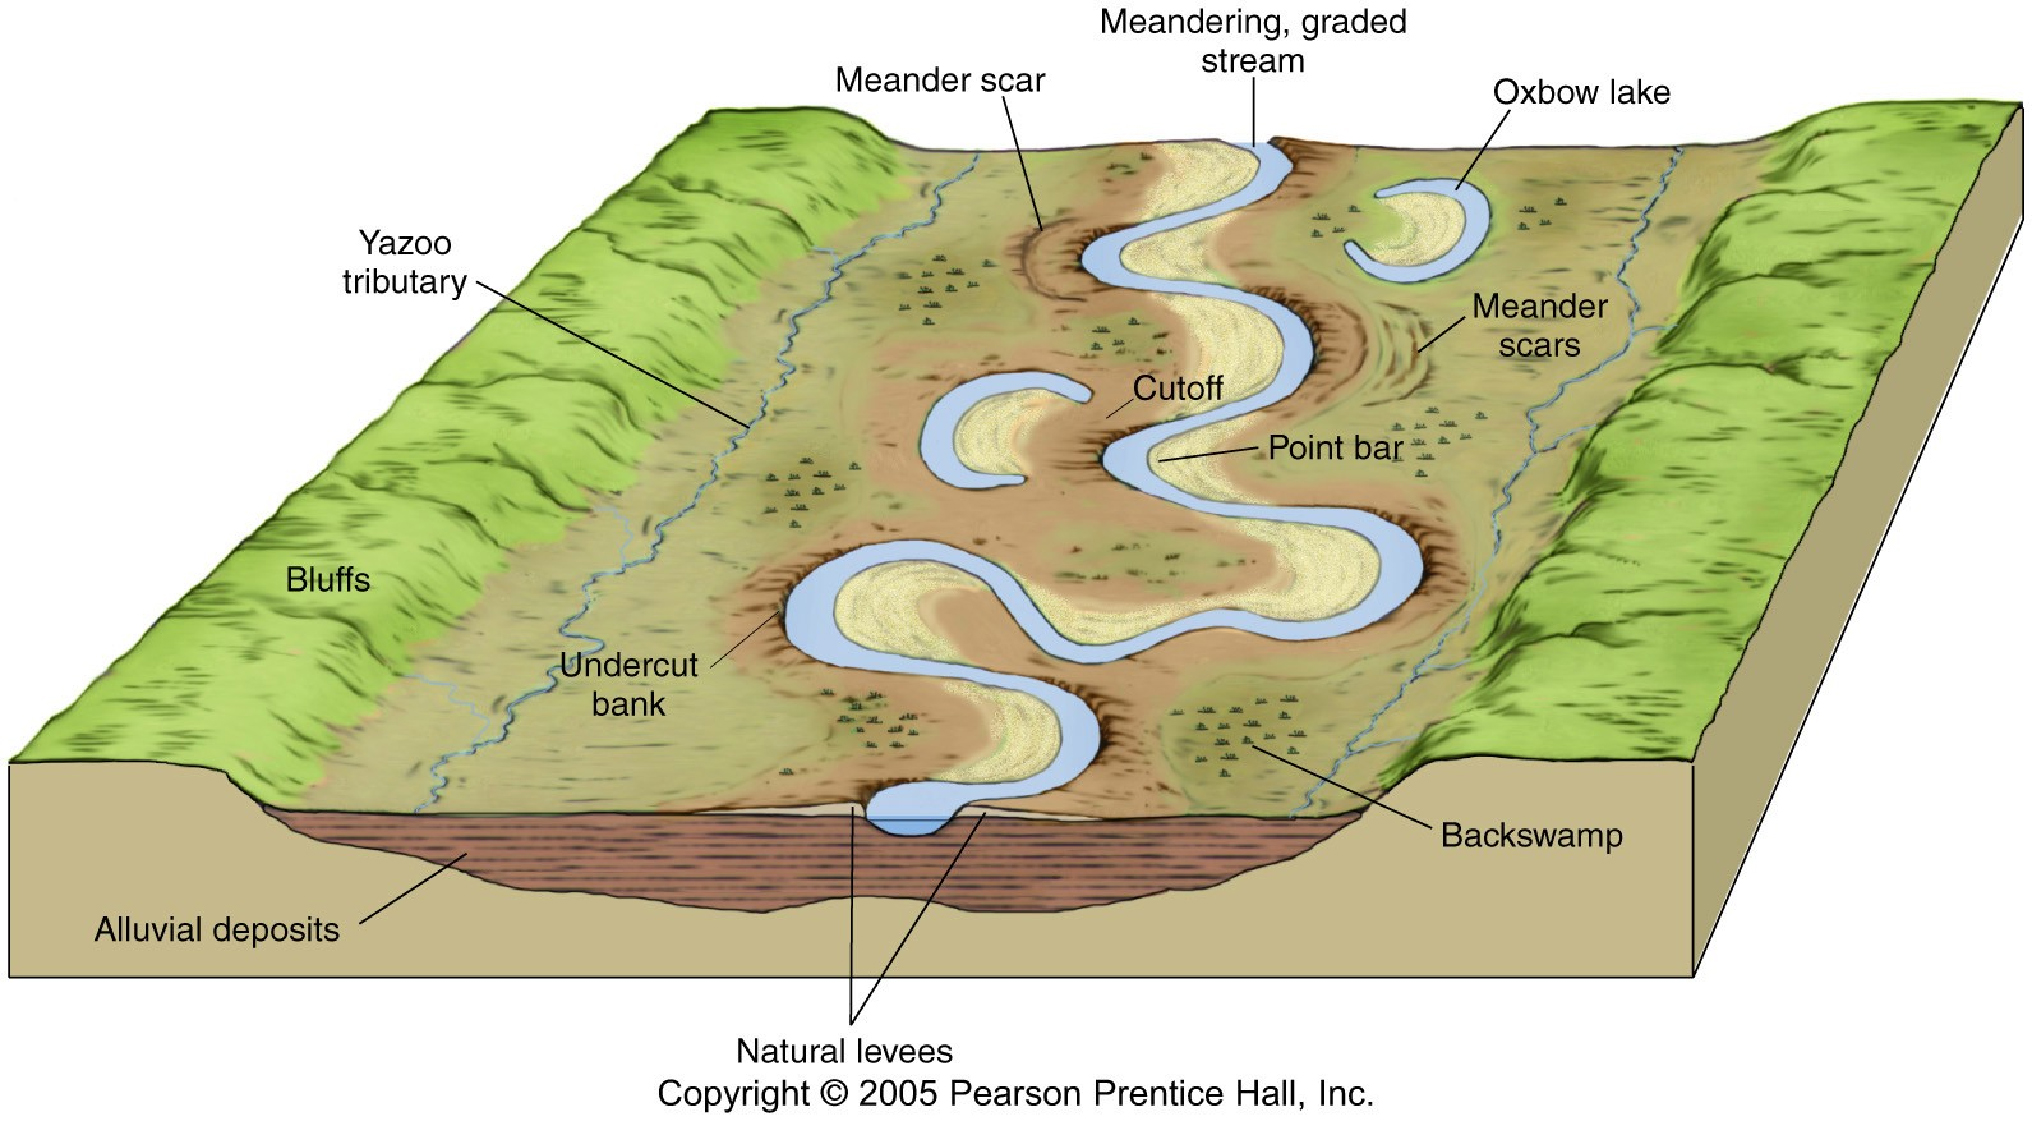 Ширина русла рек. Строение русла реки. Части реки в разрезе. Русло реки в разрезе. Геология реки.